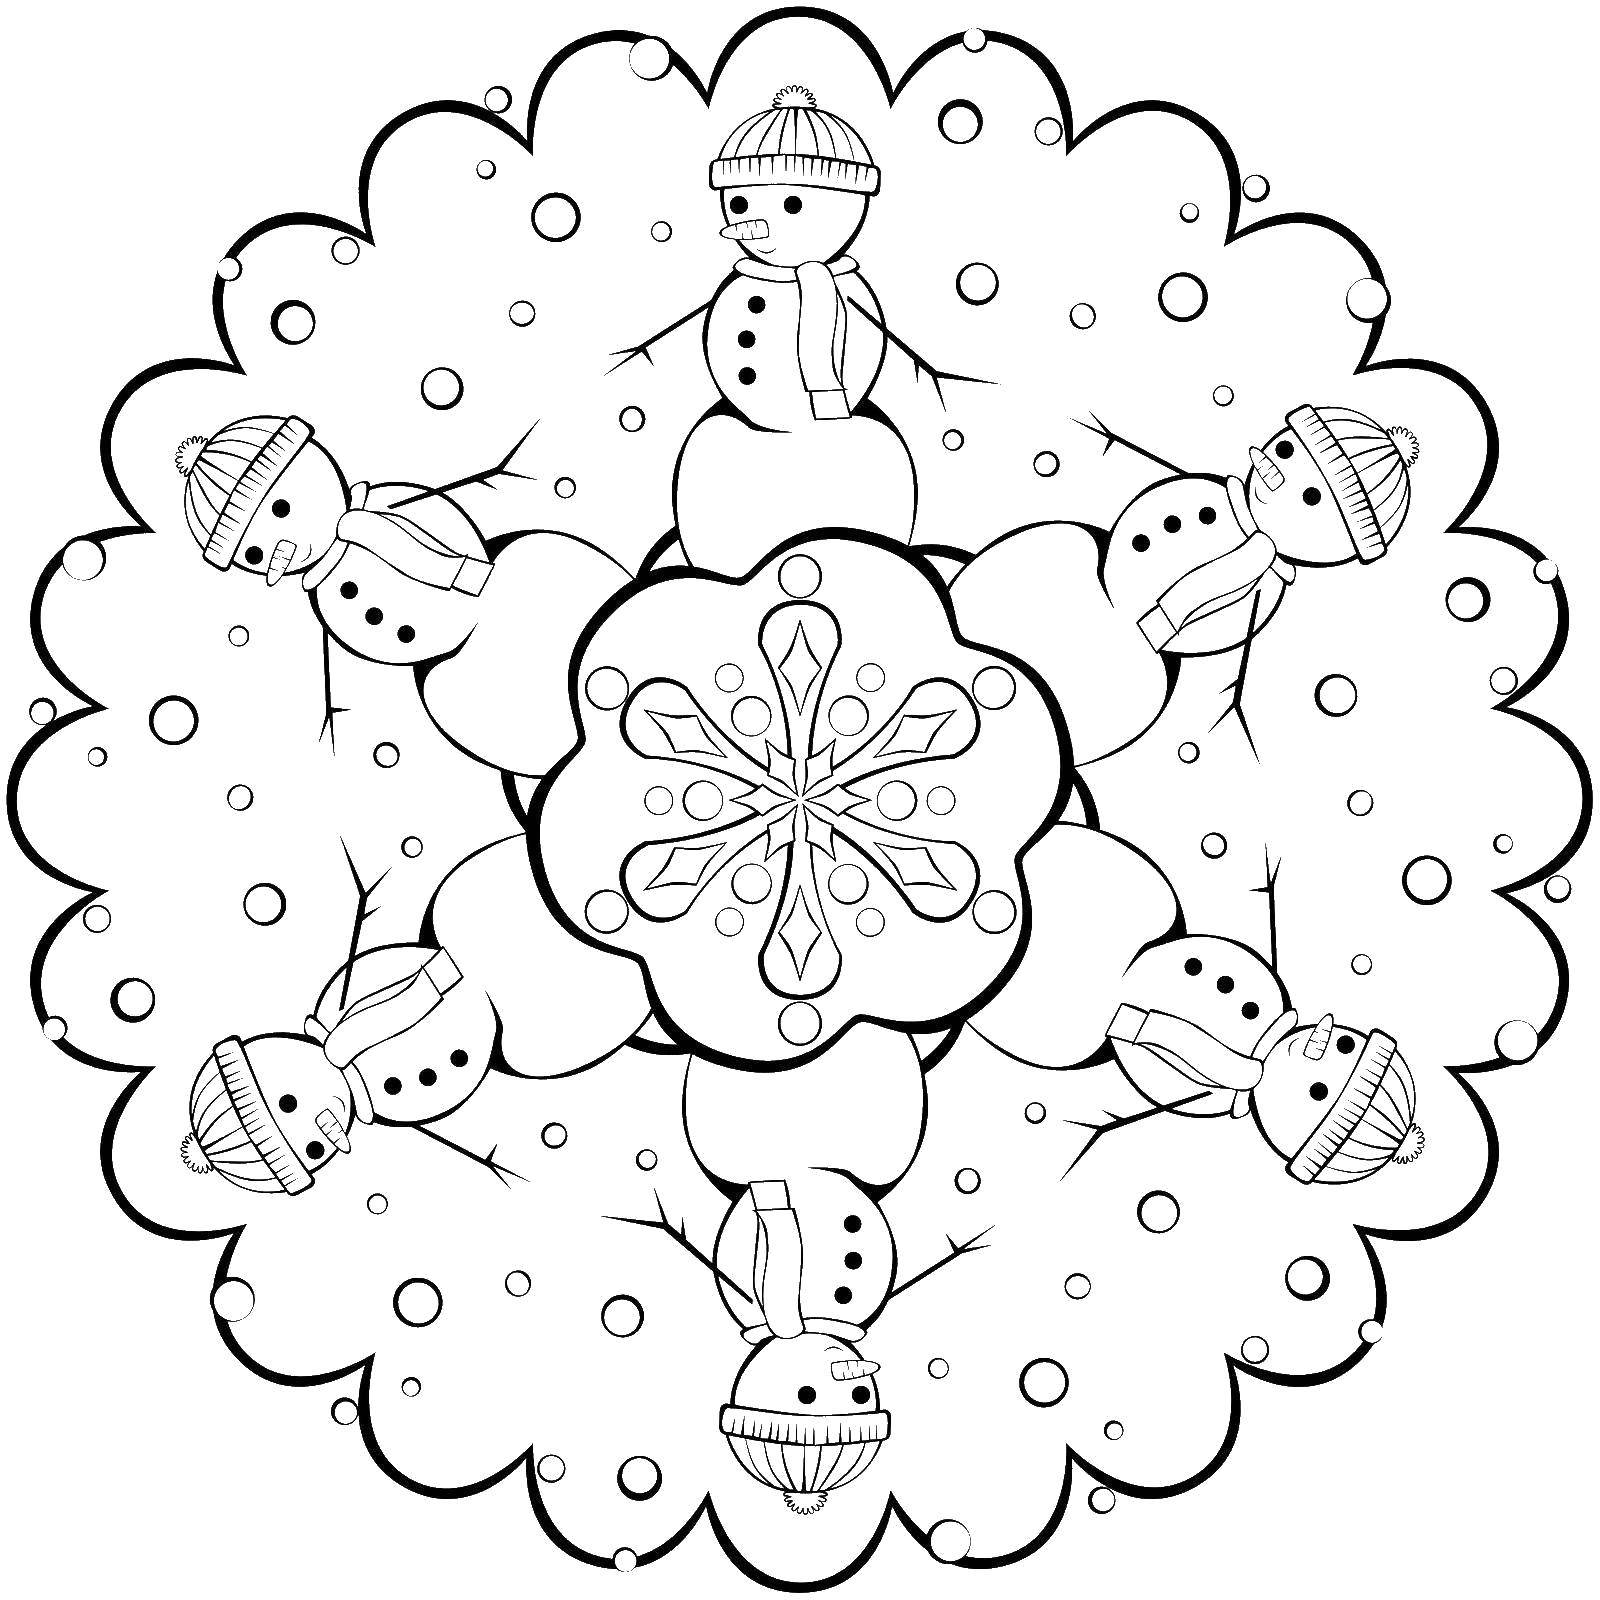 Coloring Snowmen snowflakes. Category snowflakes. Tags:  Snowflakes, snow, winter.